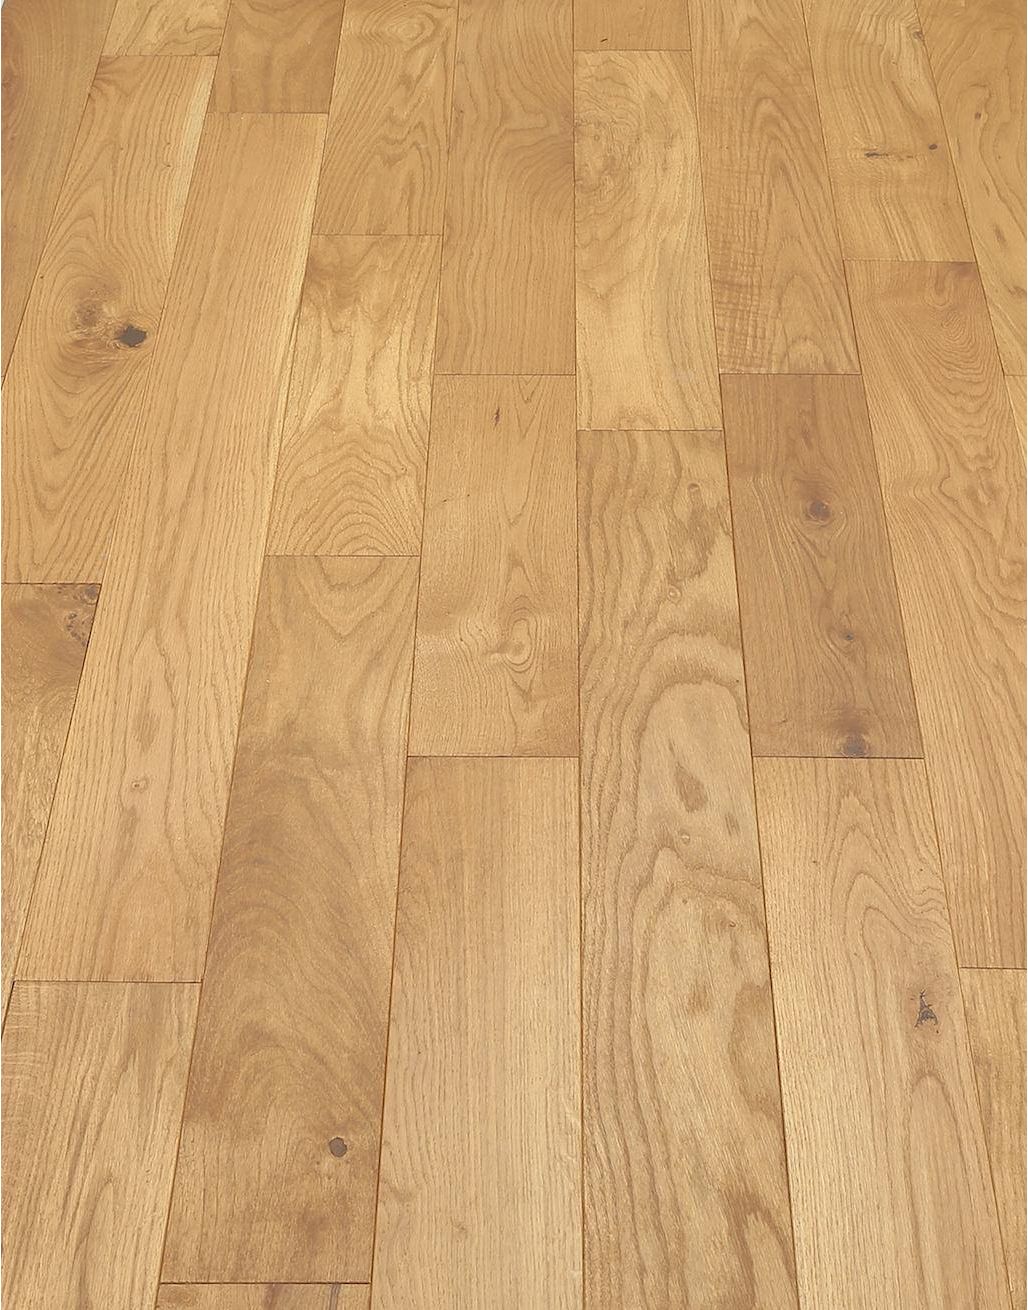 Golden Oak 125mm Oiled Solid Wood Flooring Direct Wood Flooring